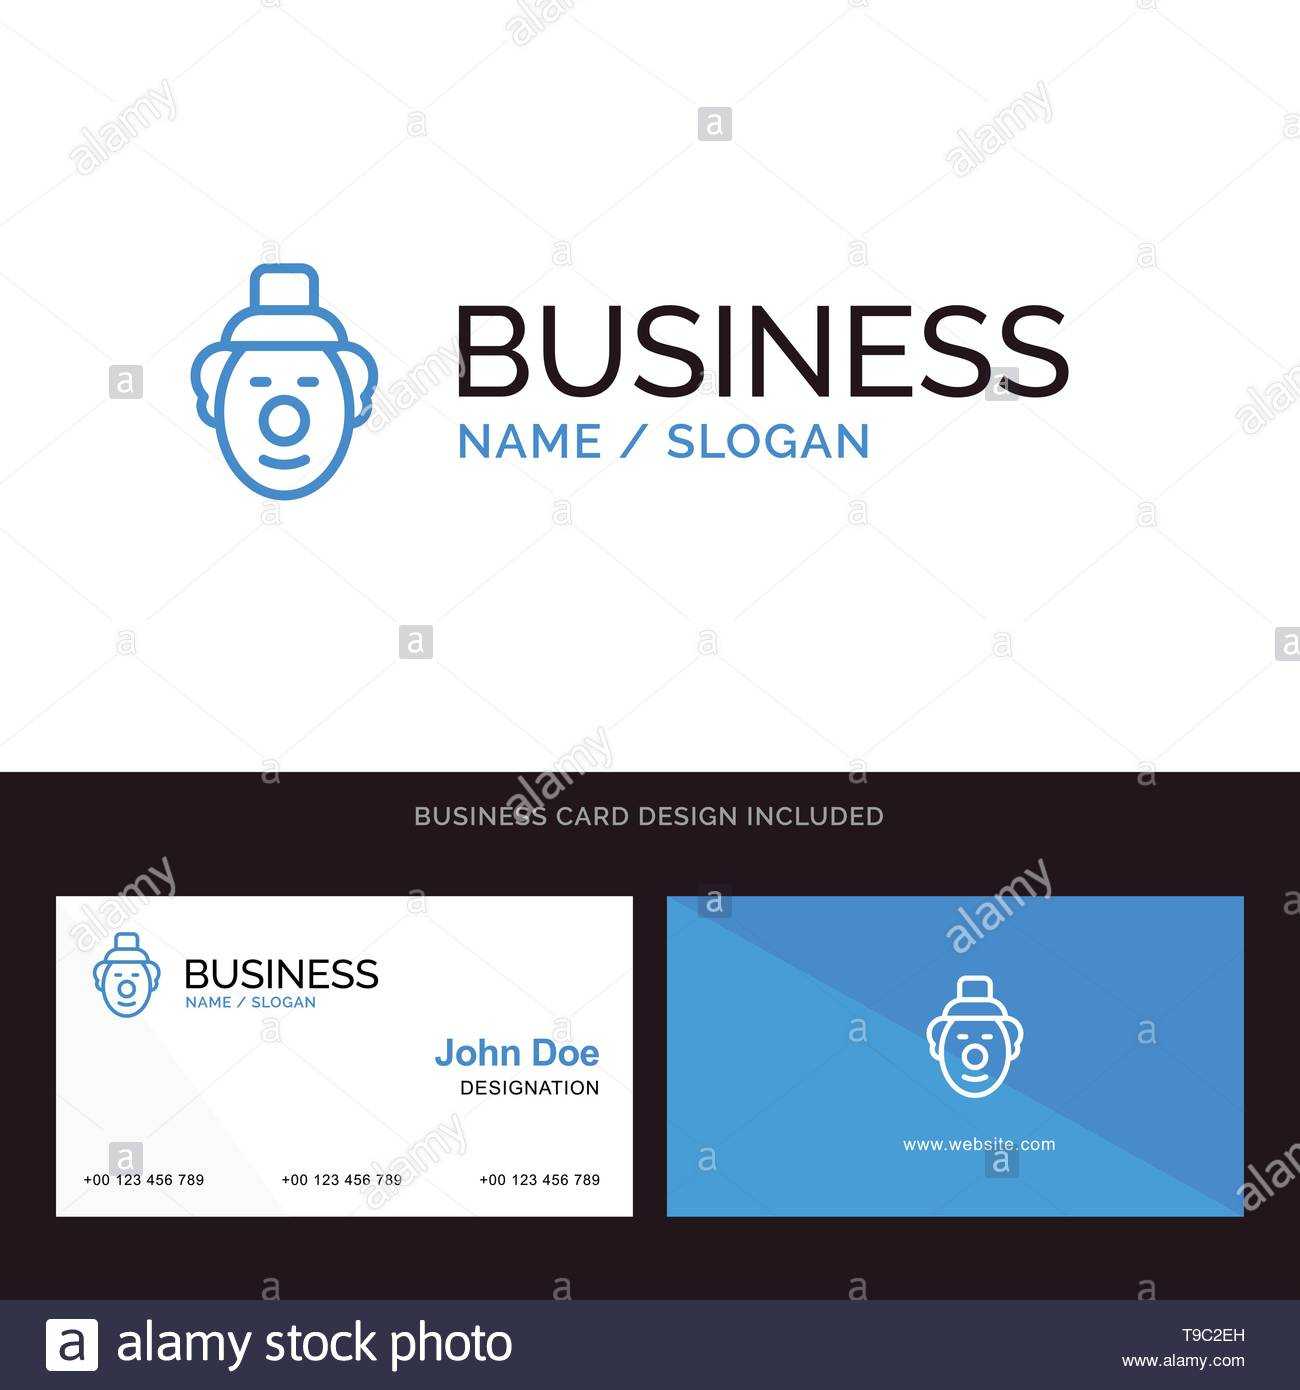 Logo And Business Card Template For Joker, Clown, Circus Within Joker Card Template